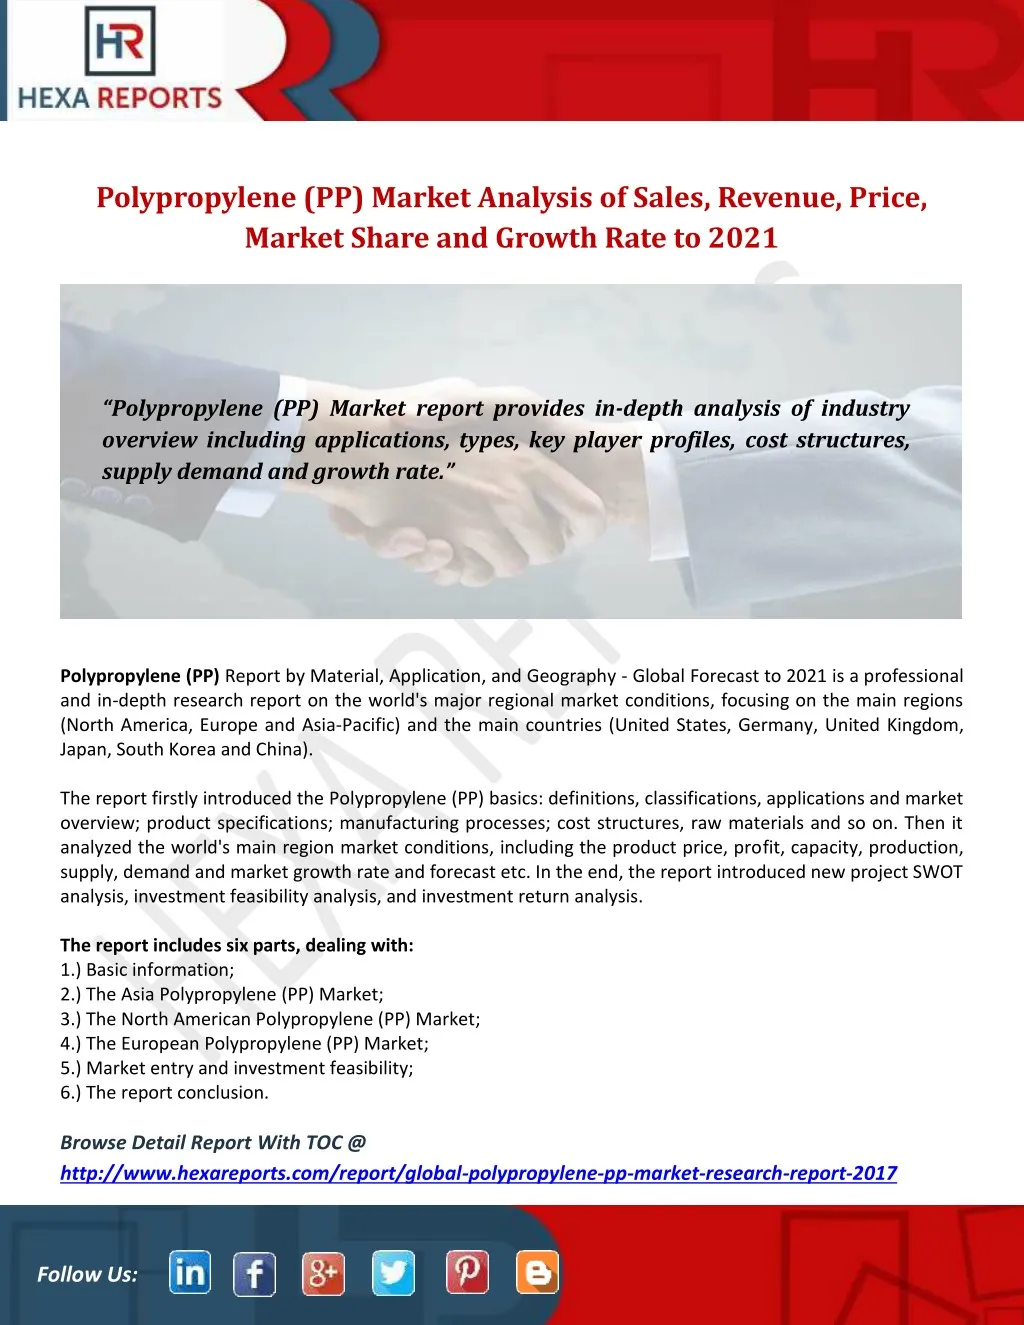 polypropylene pp market analysis of sales revenue